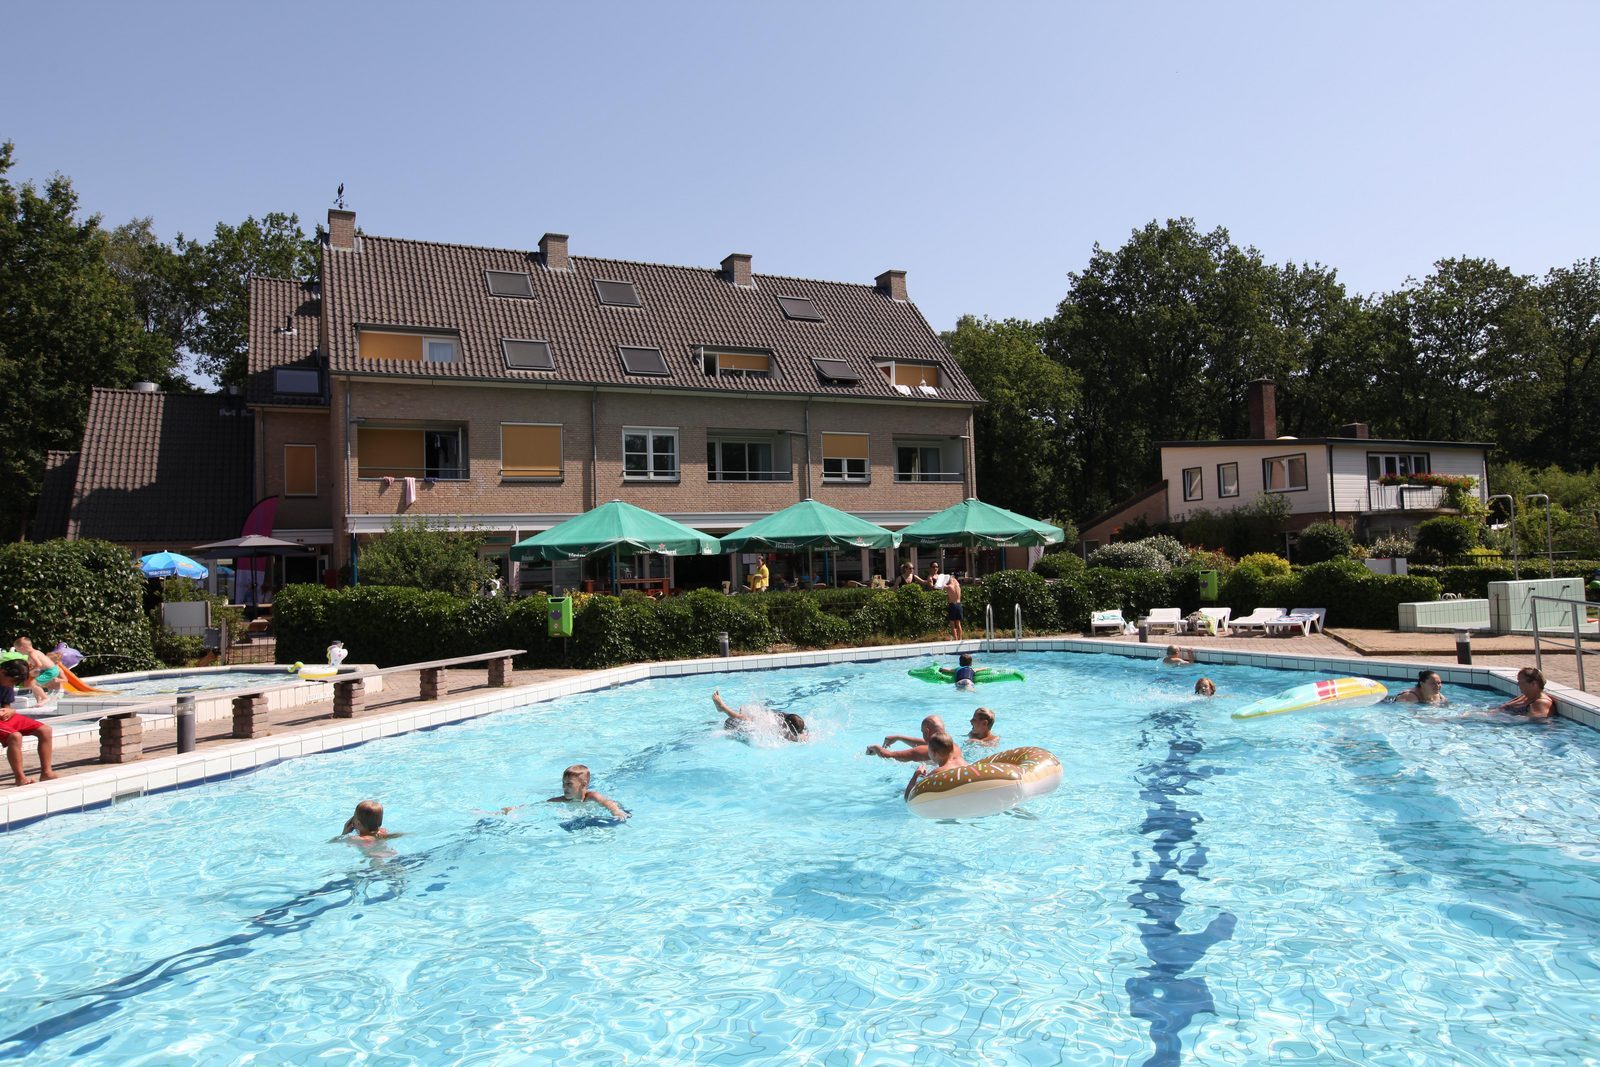 Campsite Utrecht with swimming pool